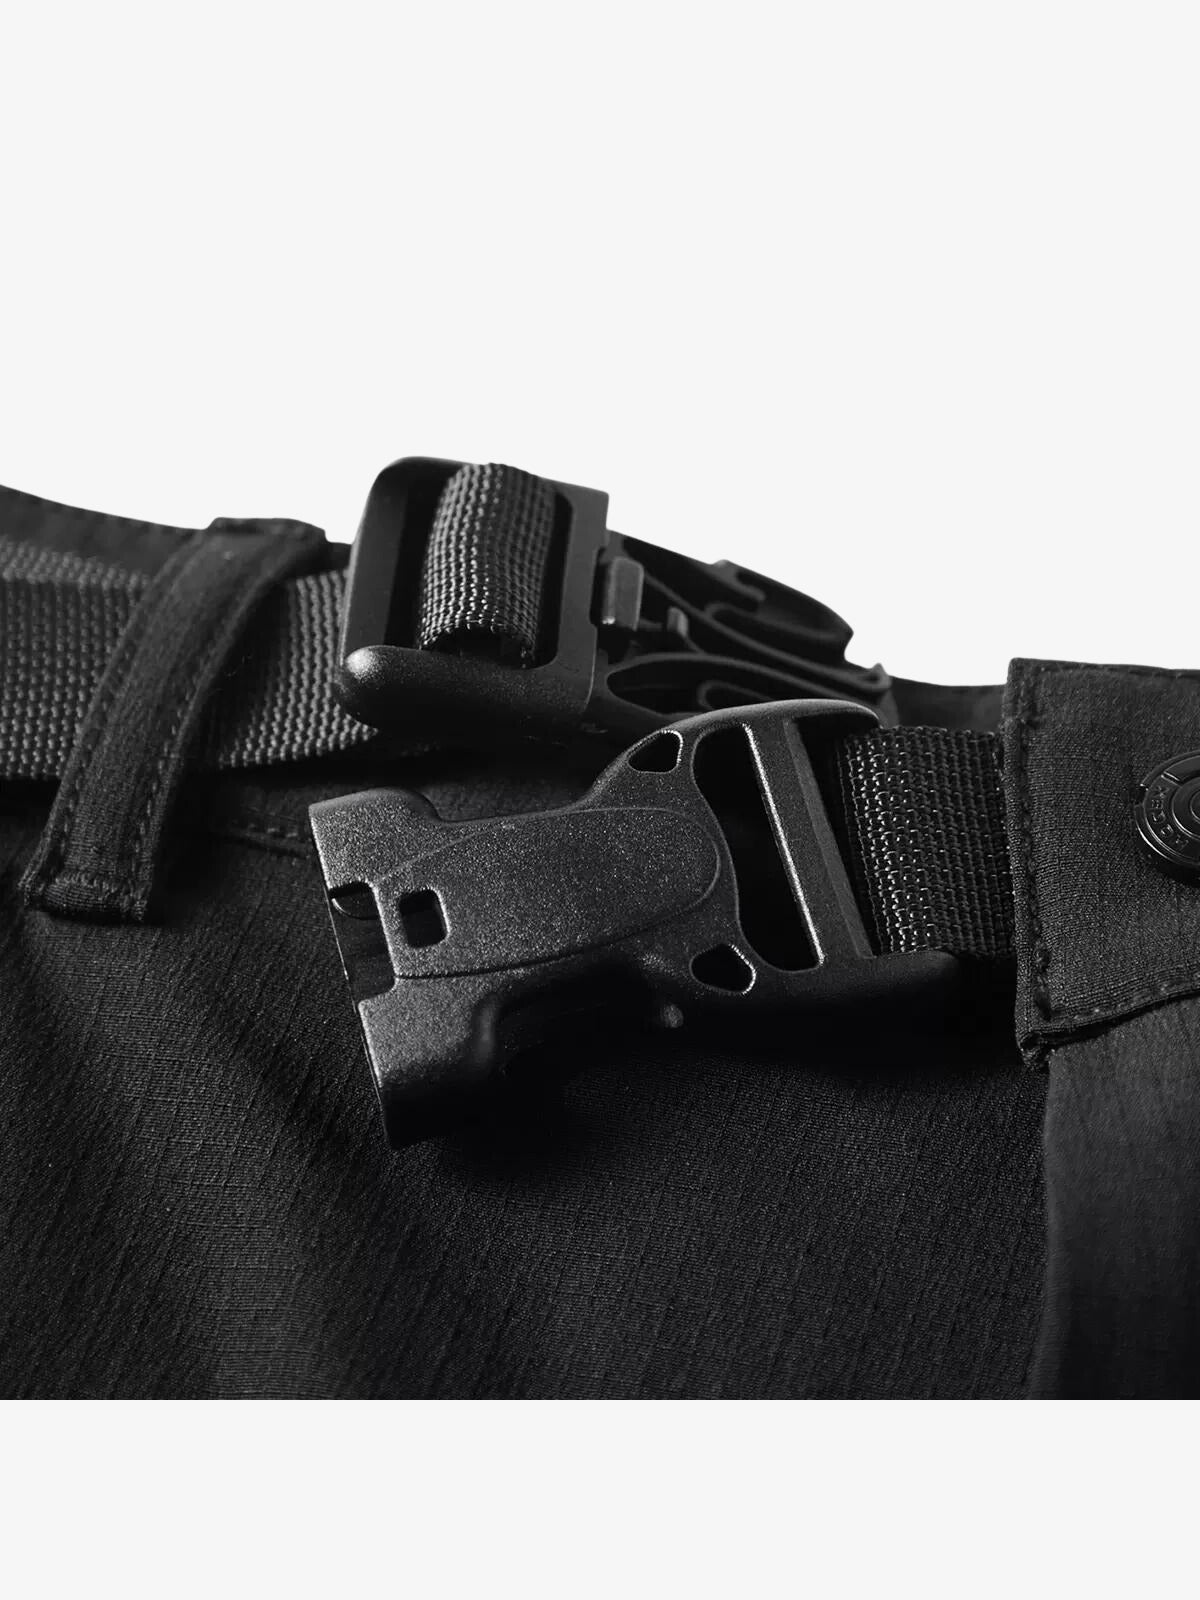 CyberFlex Zip Pants - Futuristic Style with Versatile Pockets and Zipper